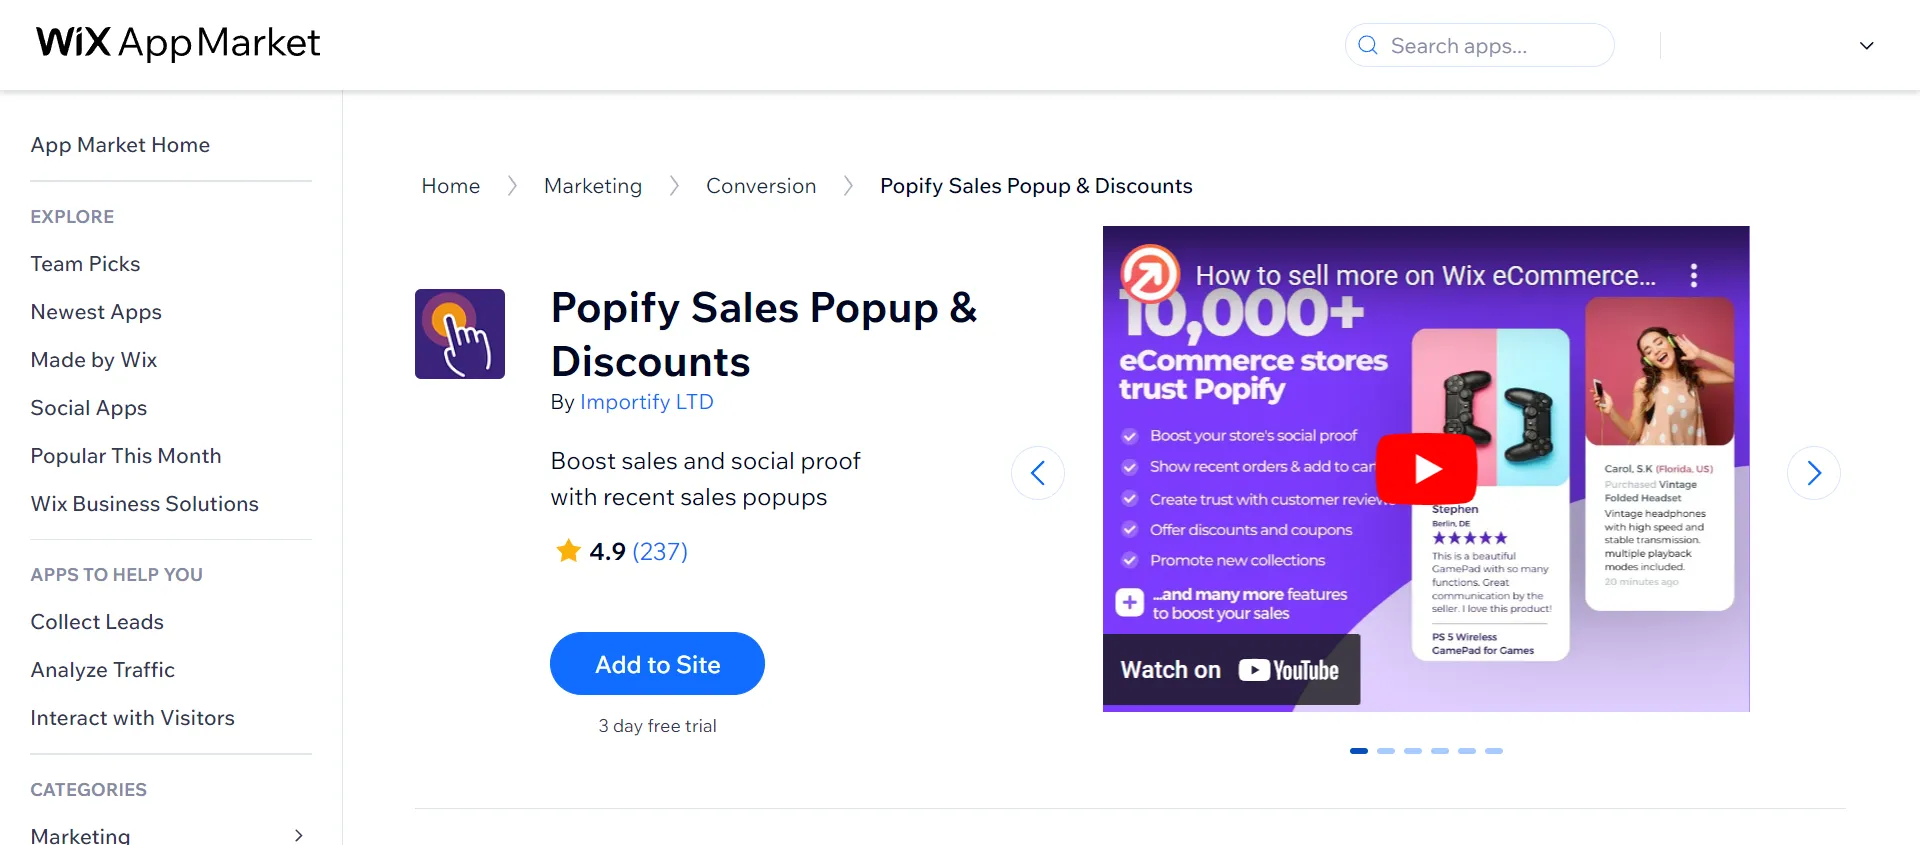 Popify Sales Popups & Discounts